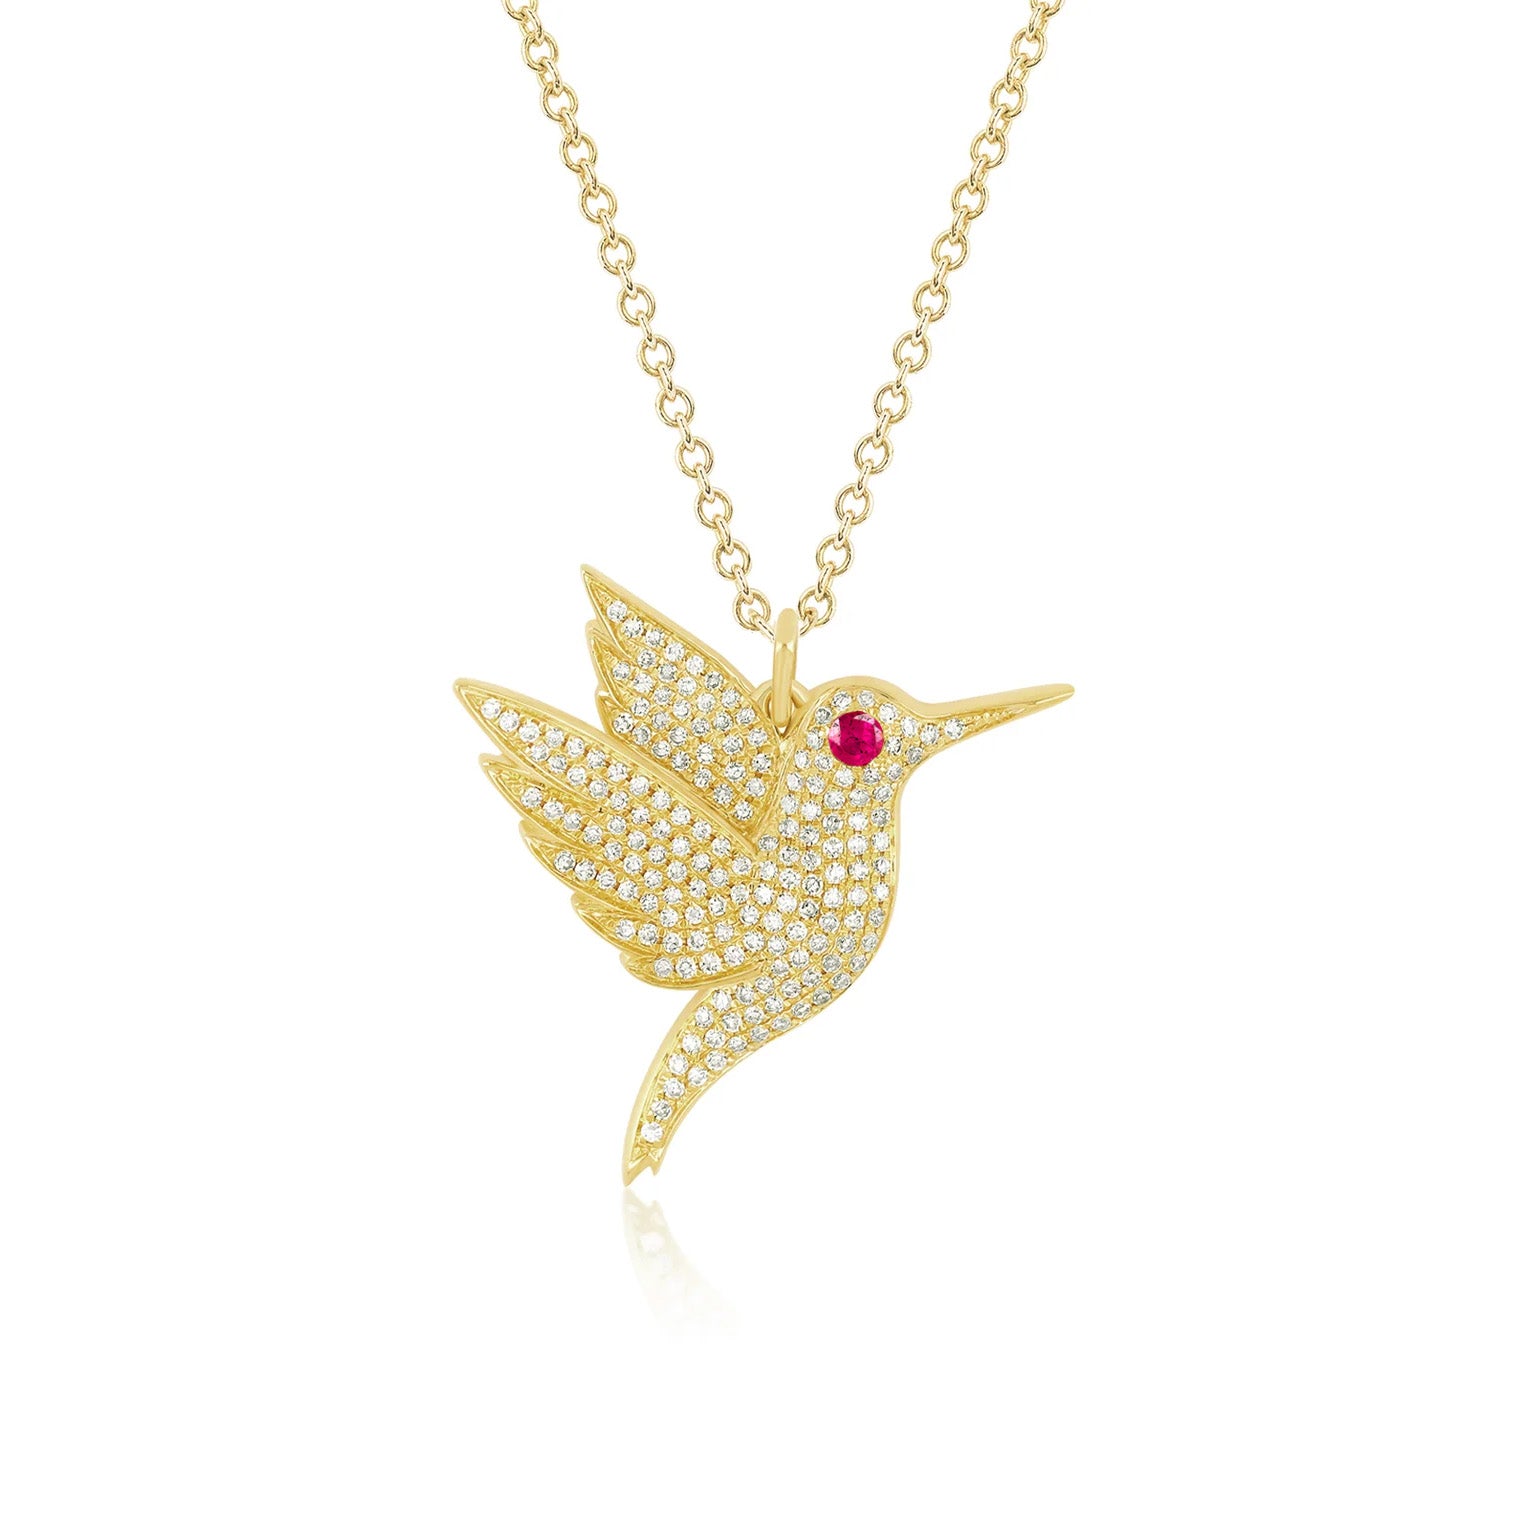 Pavé Diamond Hummingbird Necklace in 14k yellow gold with ruby birthstone eye